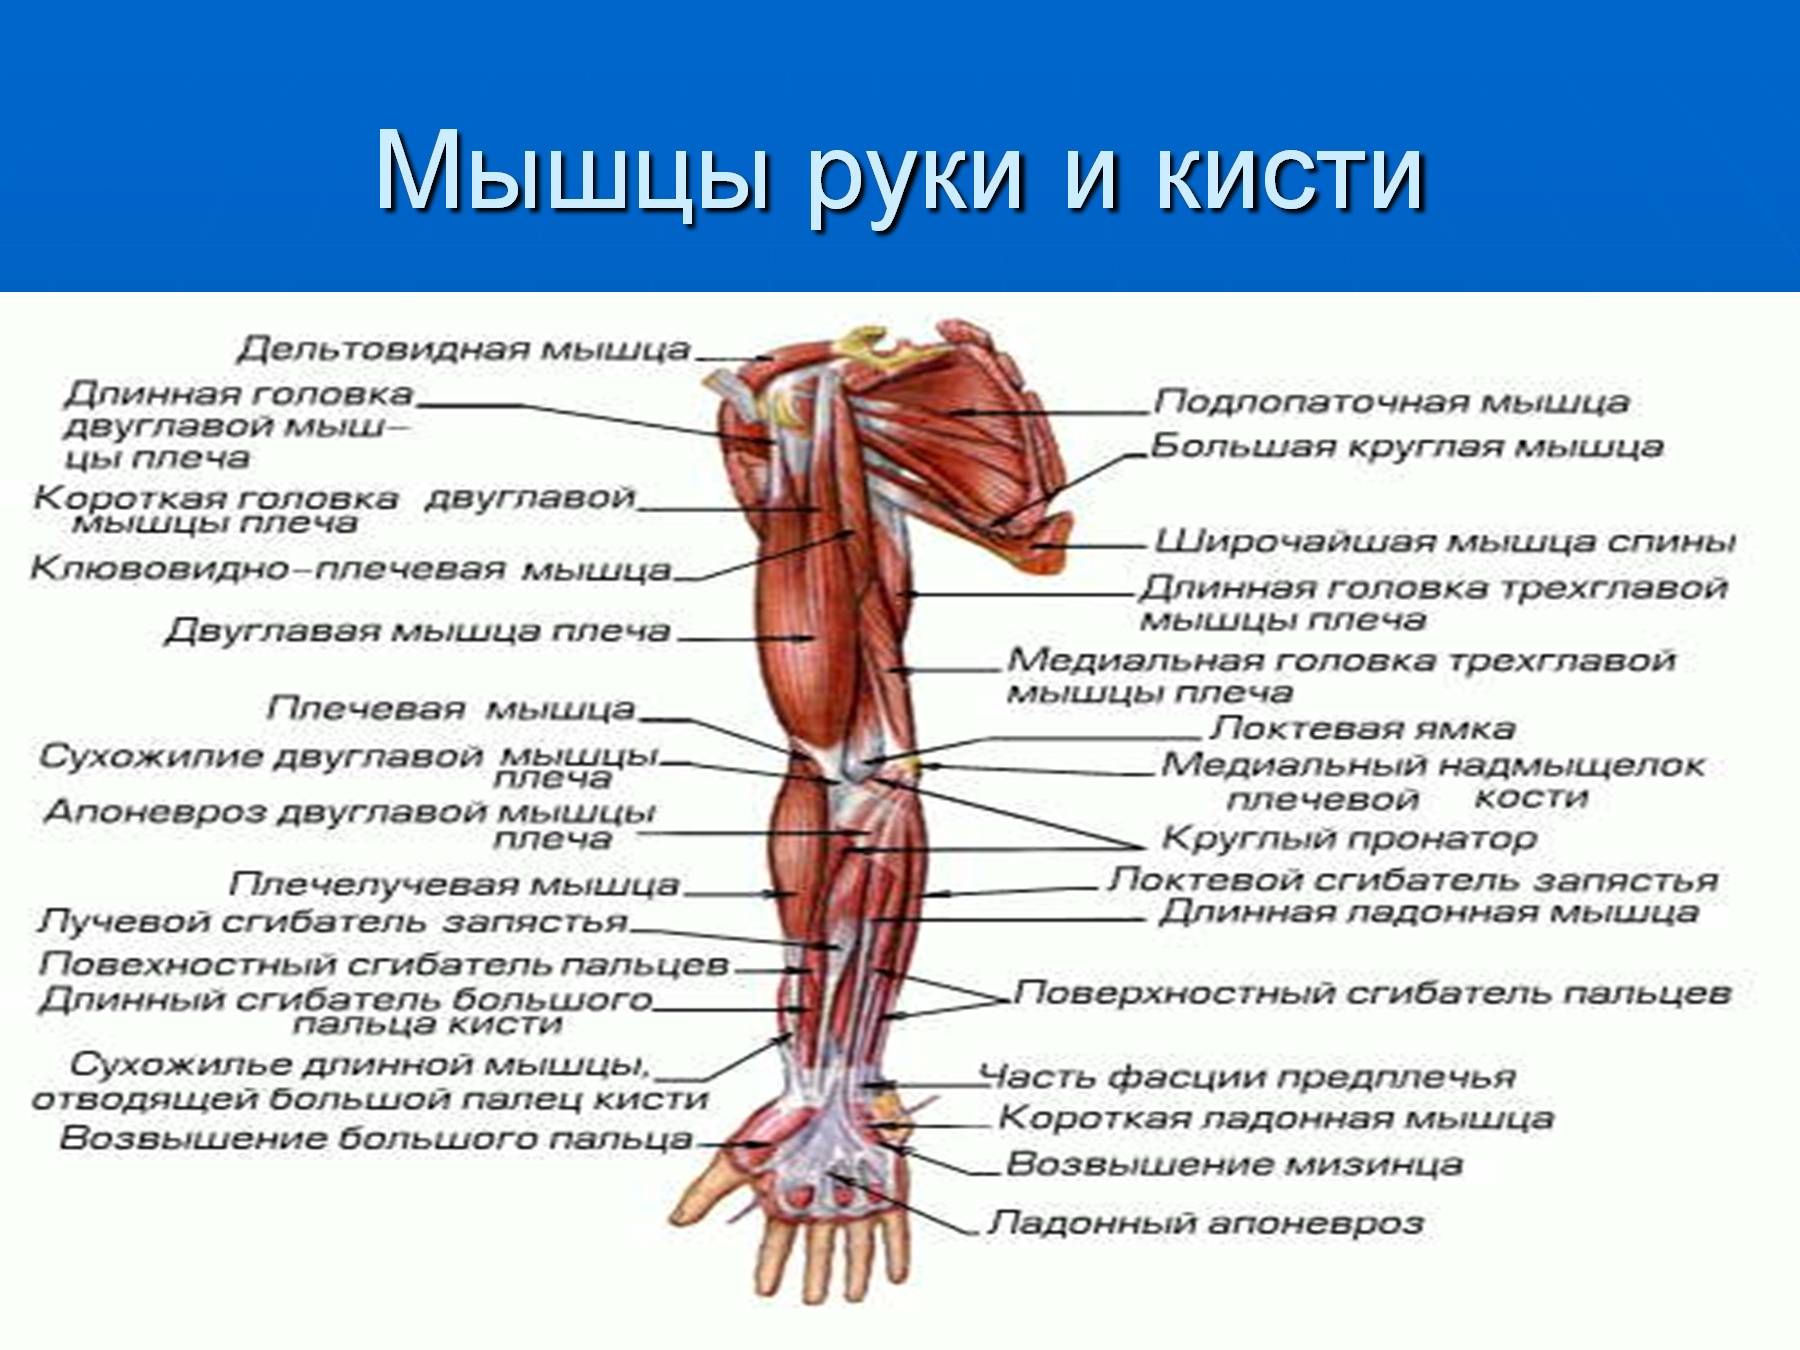 Анатомия мышц рук человека. Мышцы руки анатомия человека. Мышца руки: название мышц, функция. Мышцы руки и плеча схема. Мужци рук.